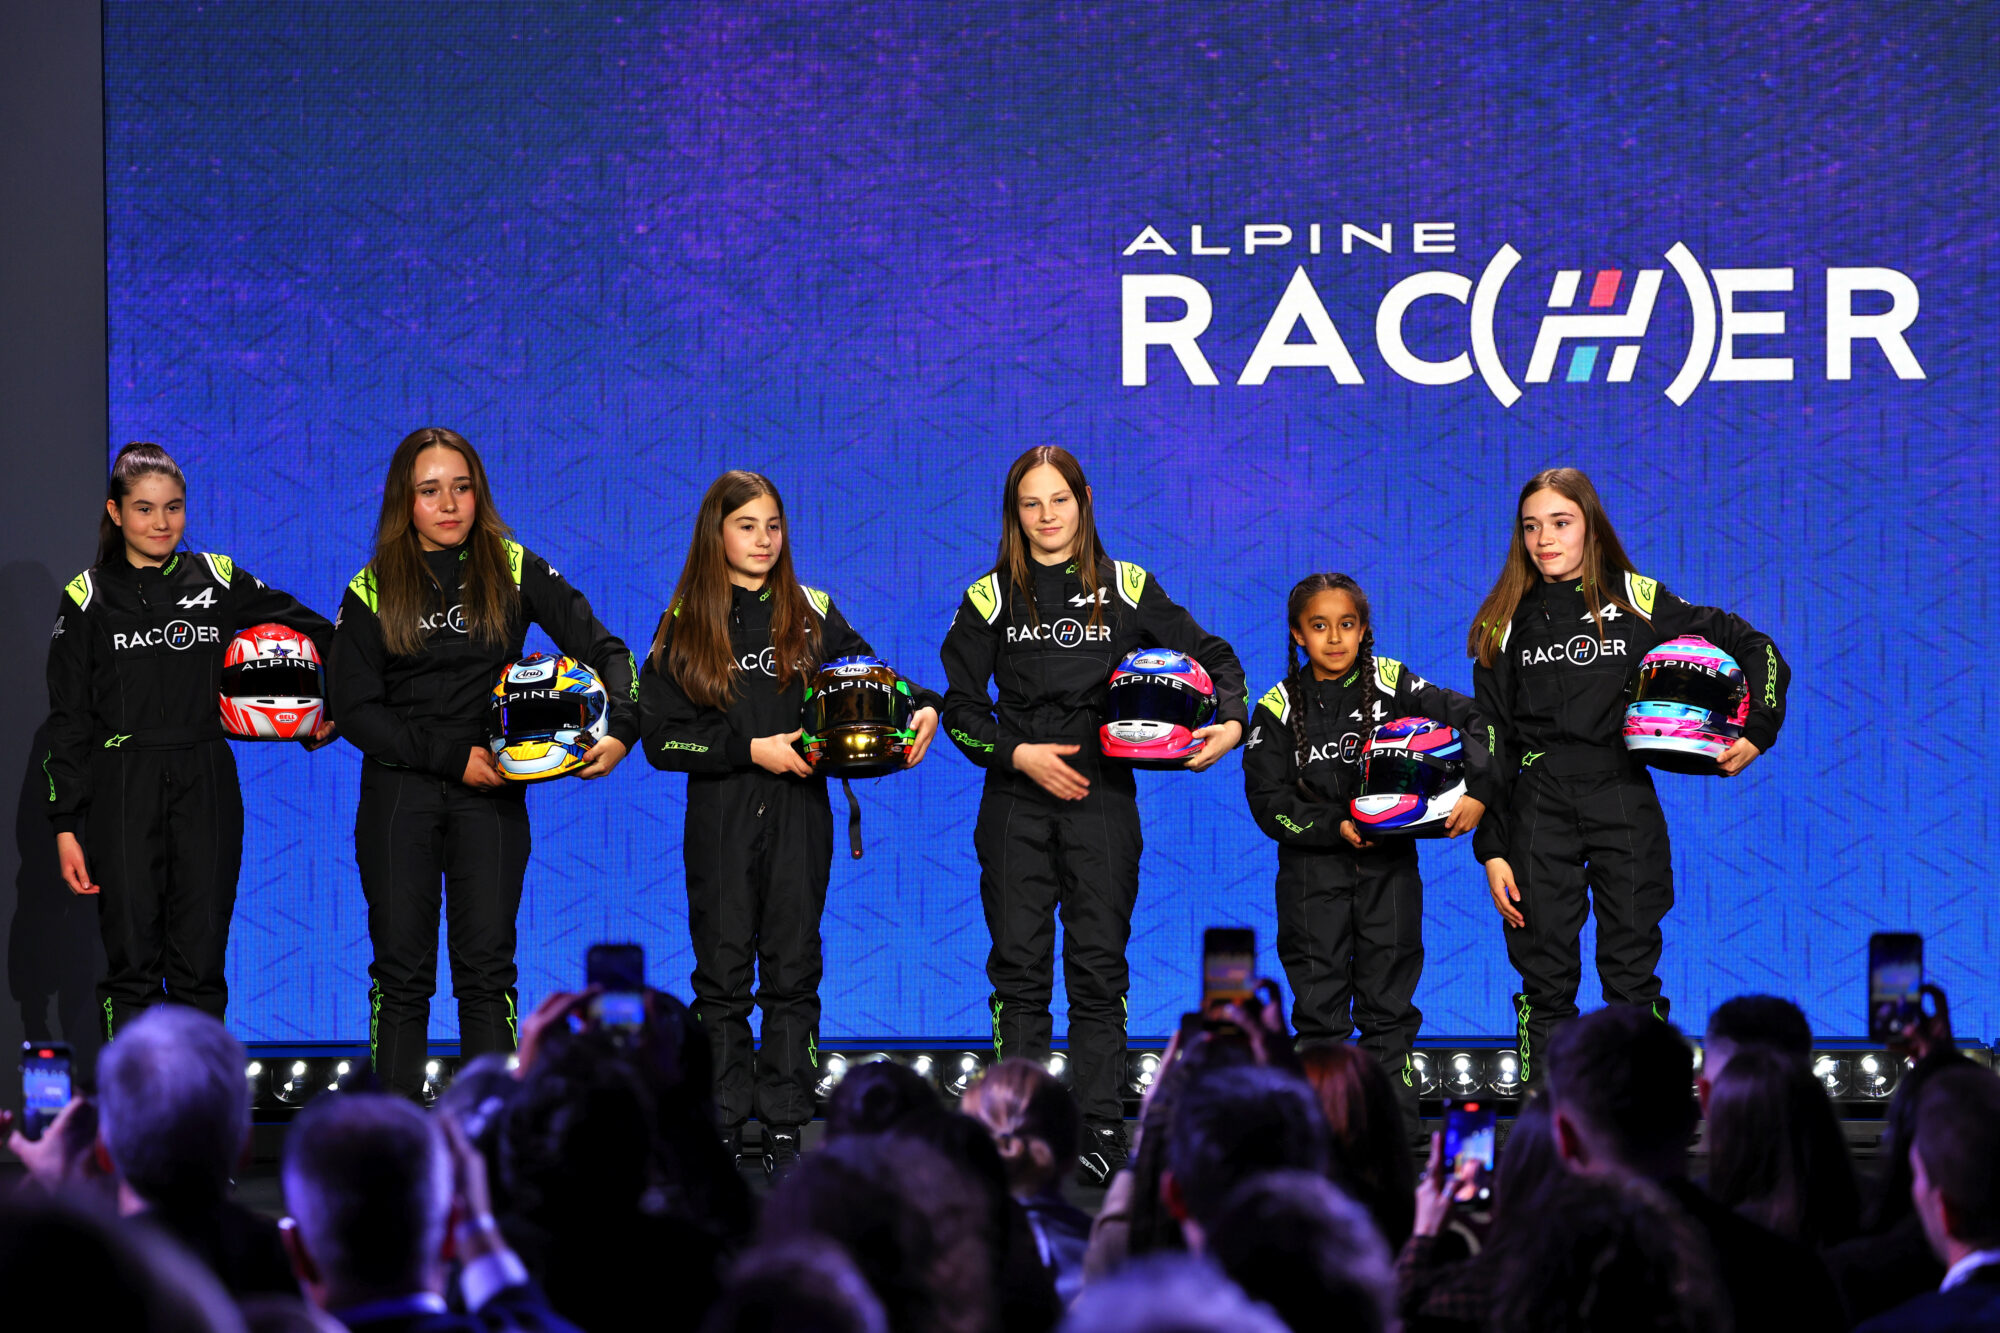 Rac(H)er programme - Alpine’s young driver karting programme